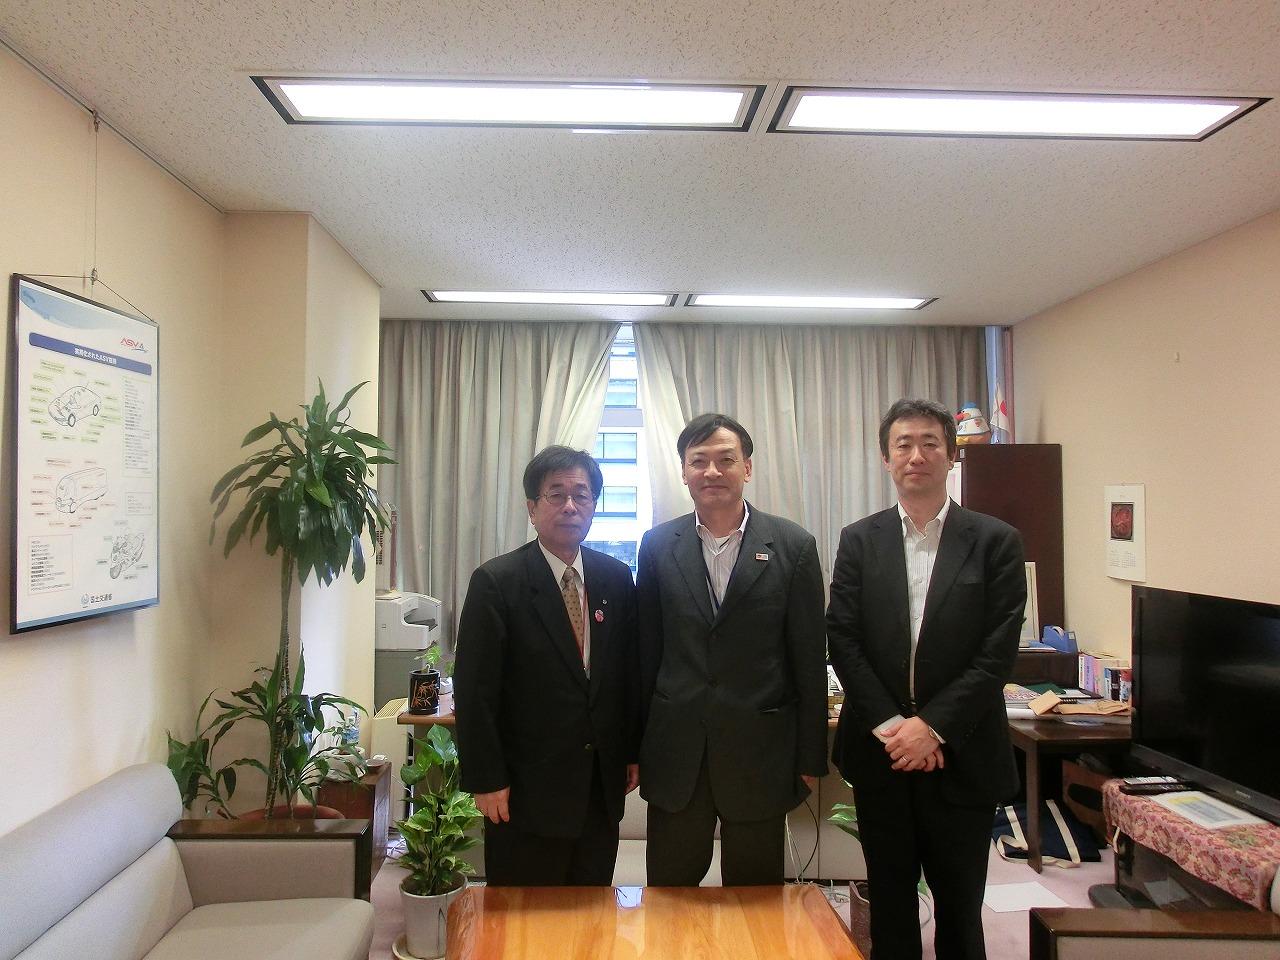 左から田代町長、難波喬司技術総括審議官、鈴木徹室長